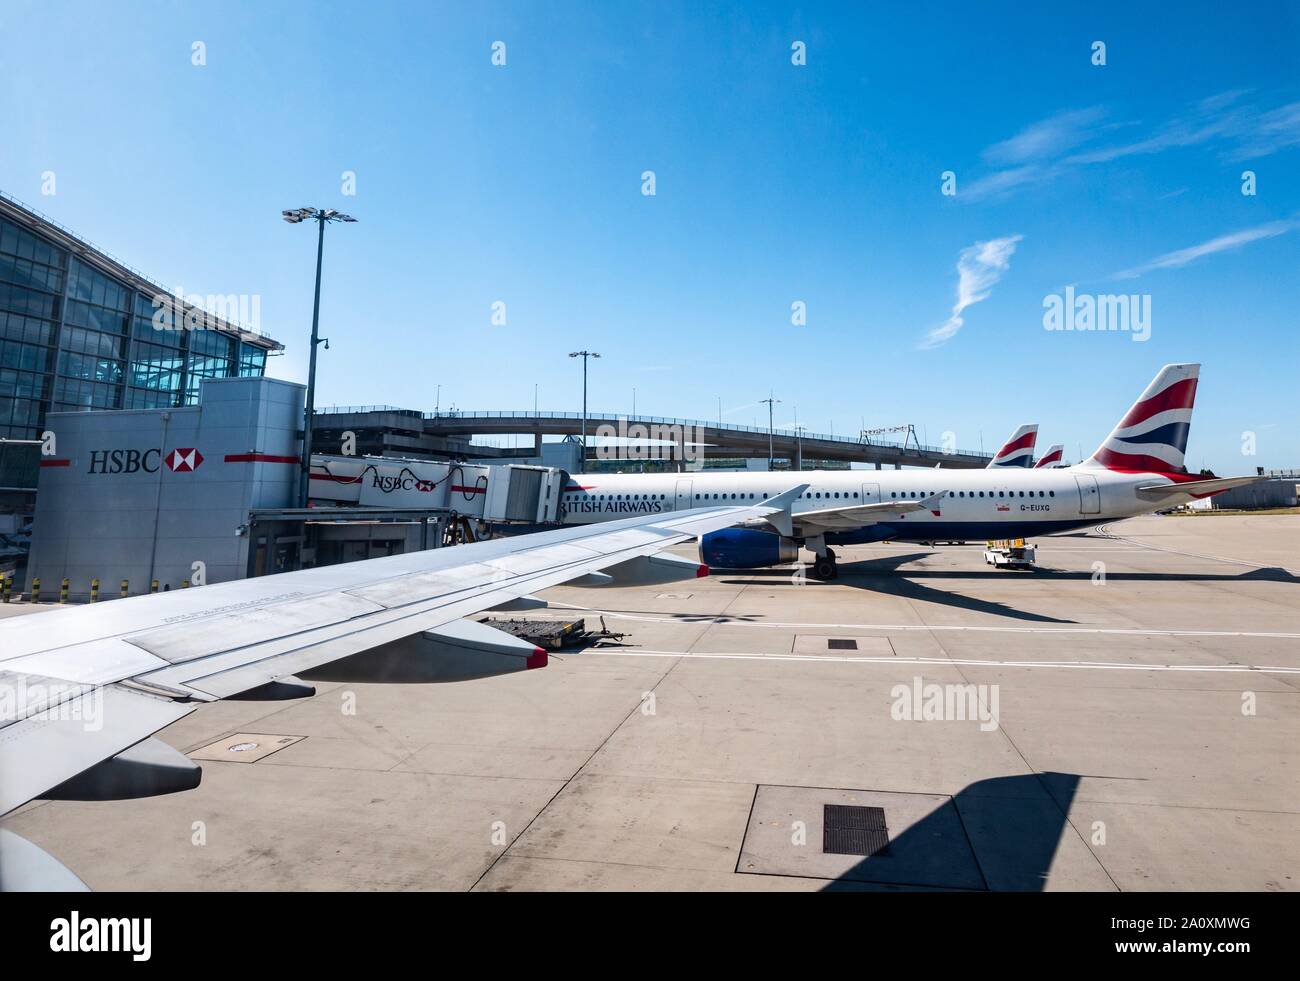 View from plane window of British Airways aeroplane on airport apron, Heathrow airport, London, England, UK Stock Photo